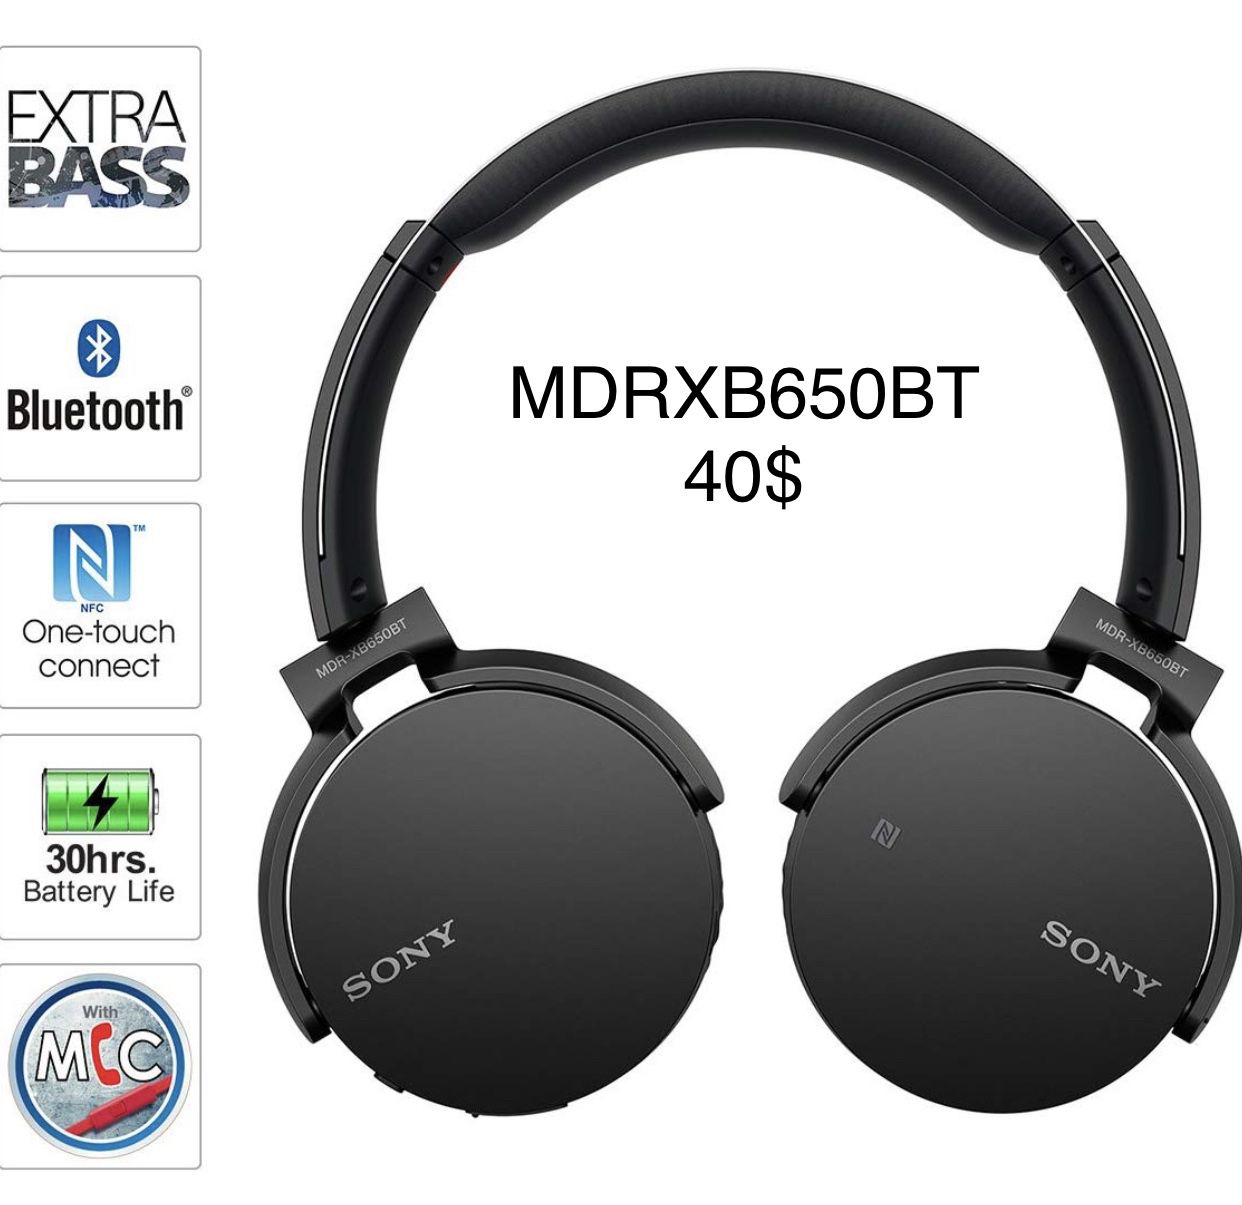 NEW Sony MDRXB650BT Extra Bass Headphones